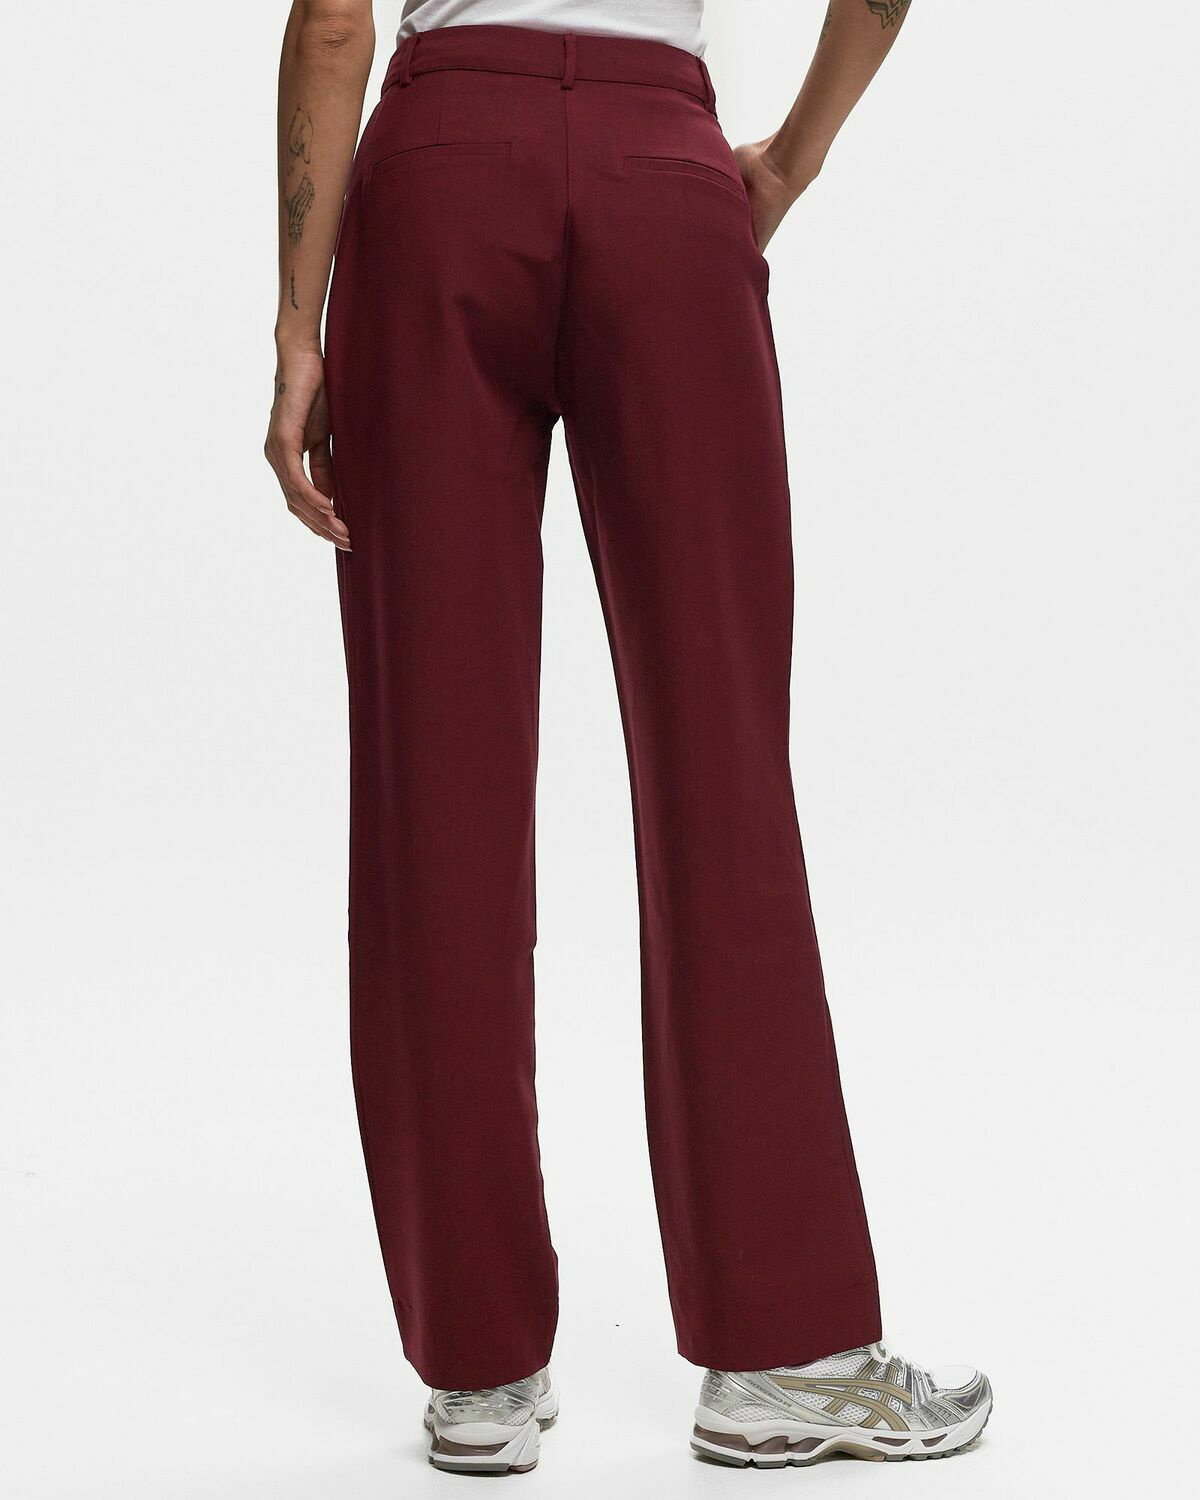 Women's Trousers | Casual Trousers & Pants for Women | ASOS